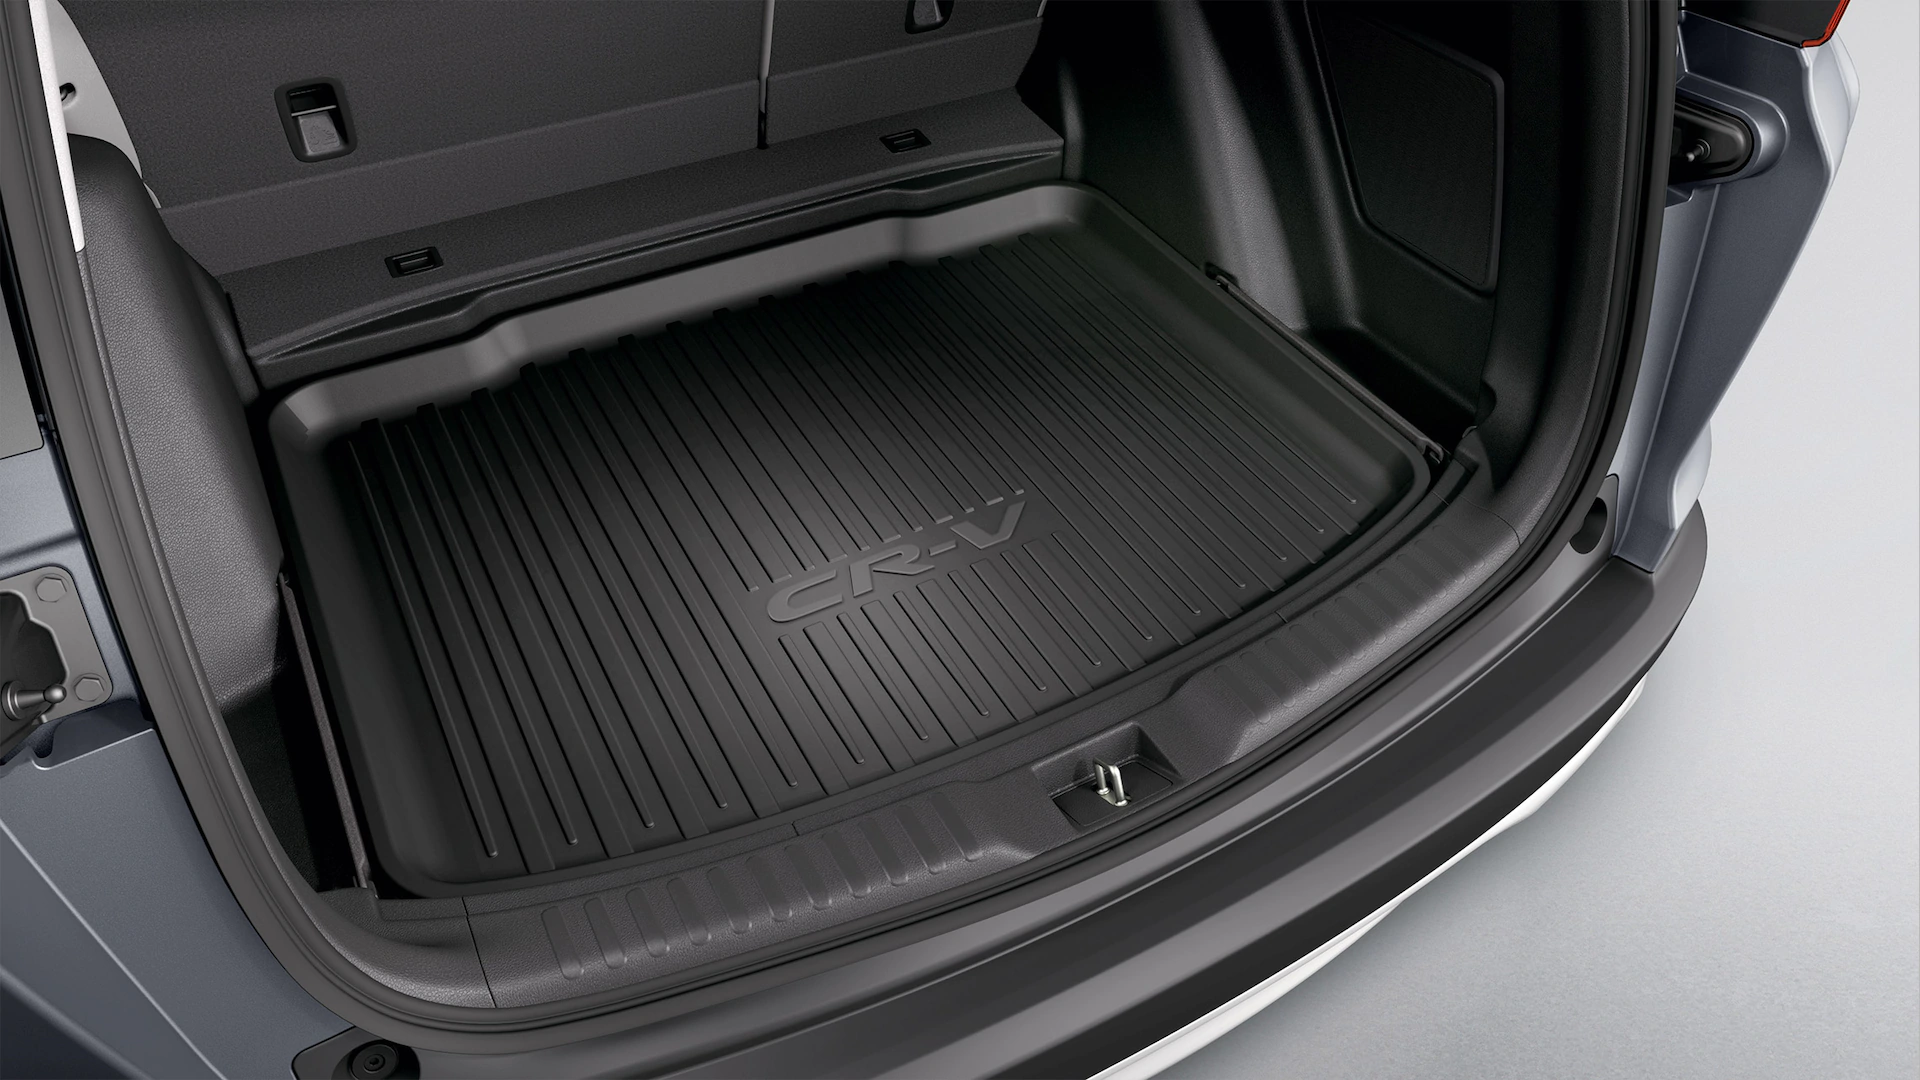 Honda CR-V Trunk space